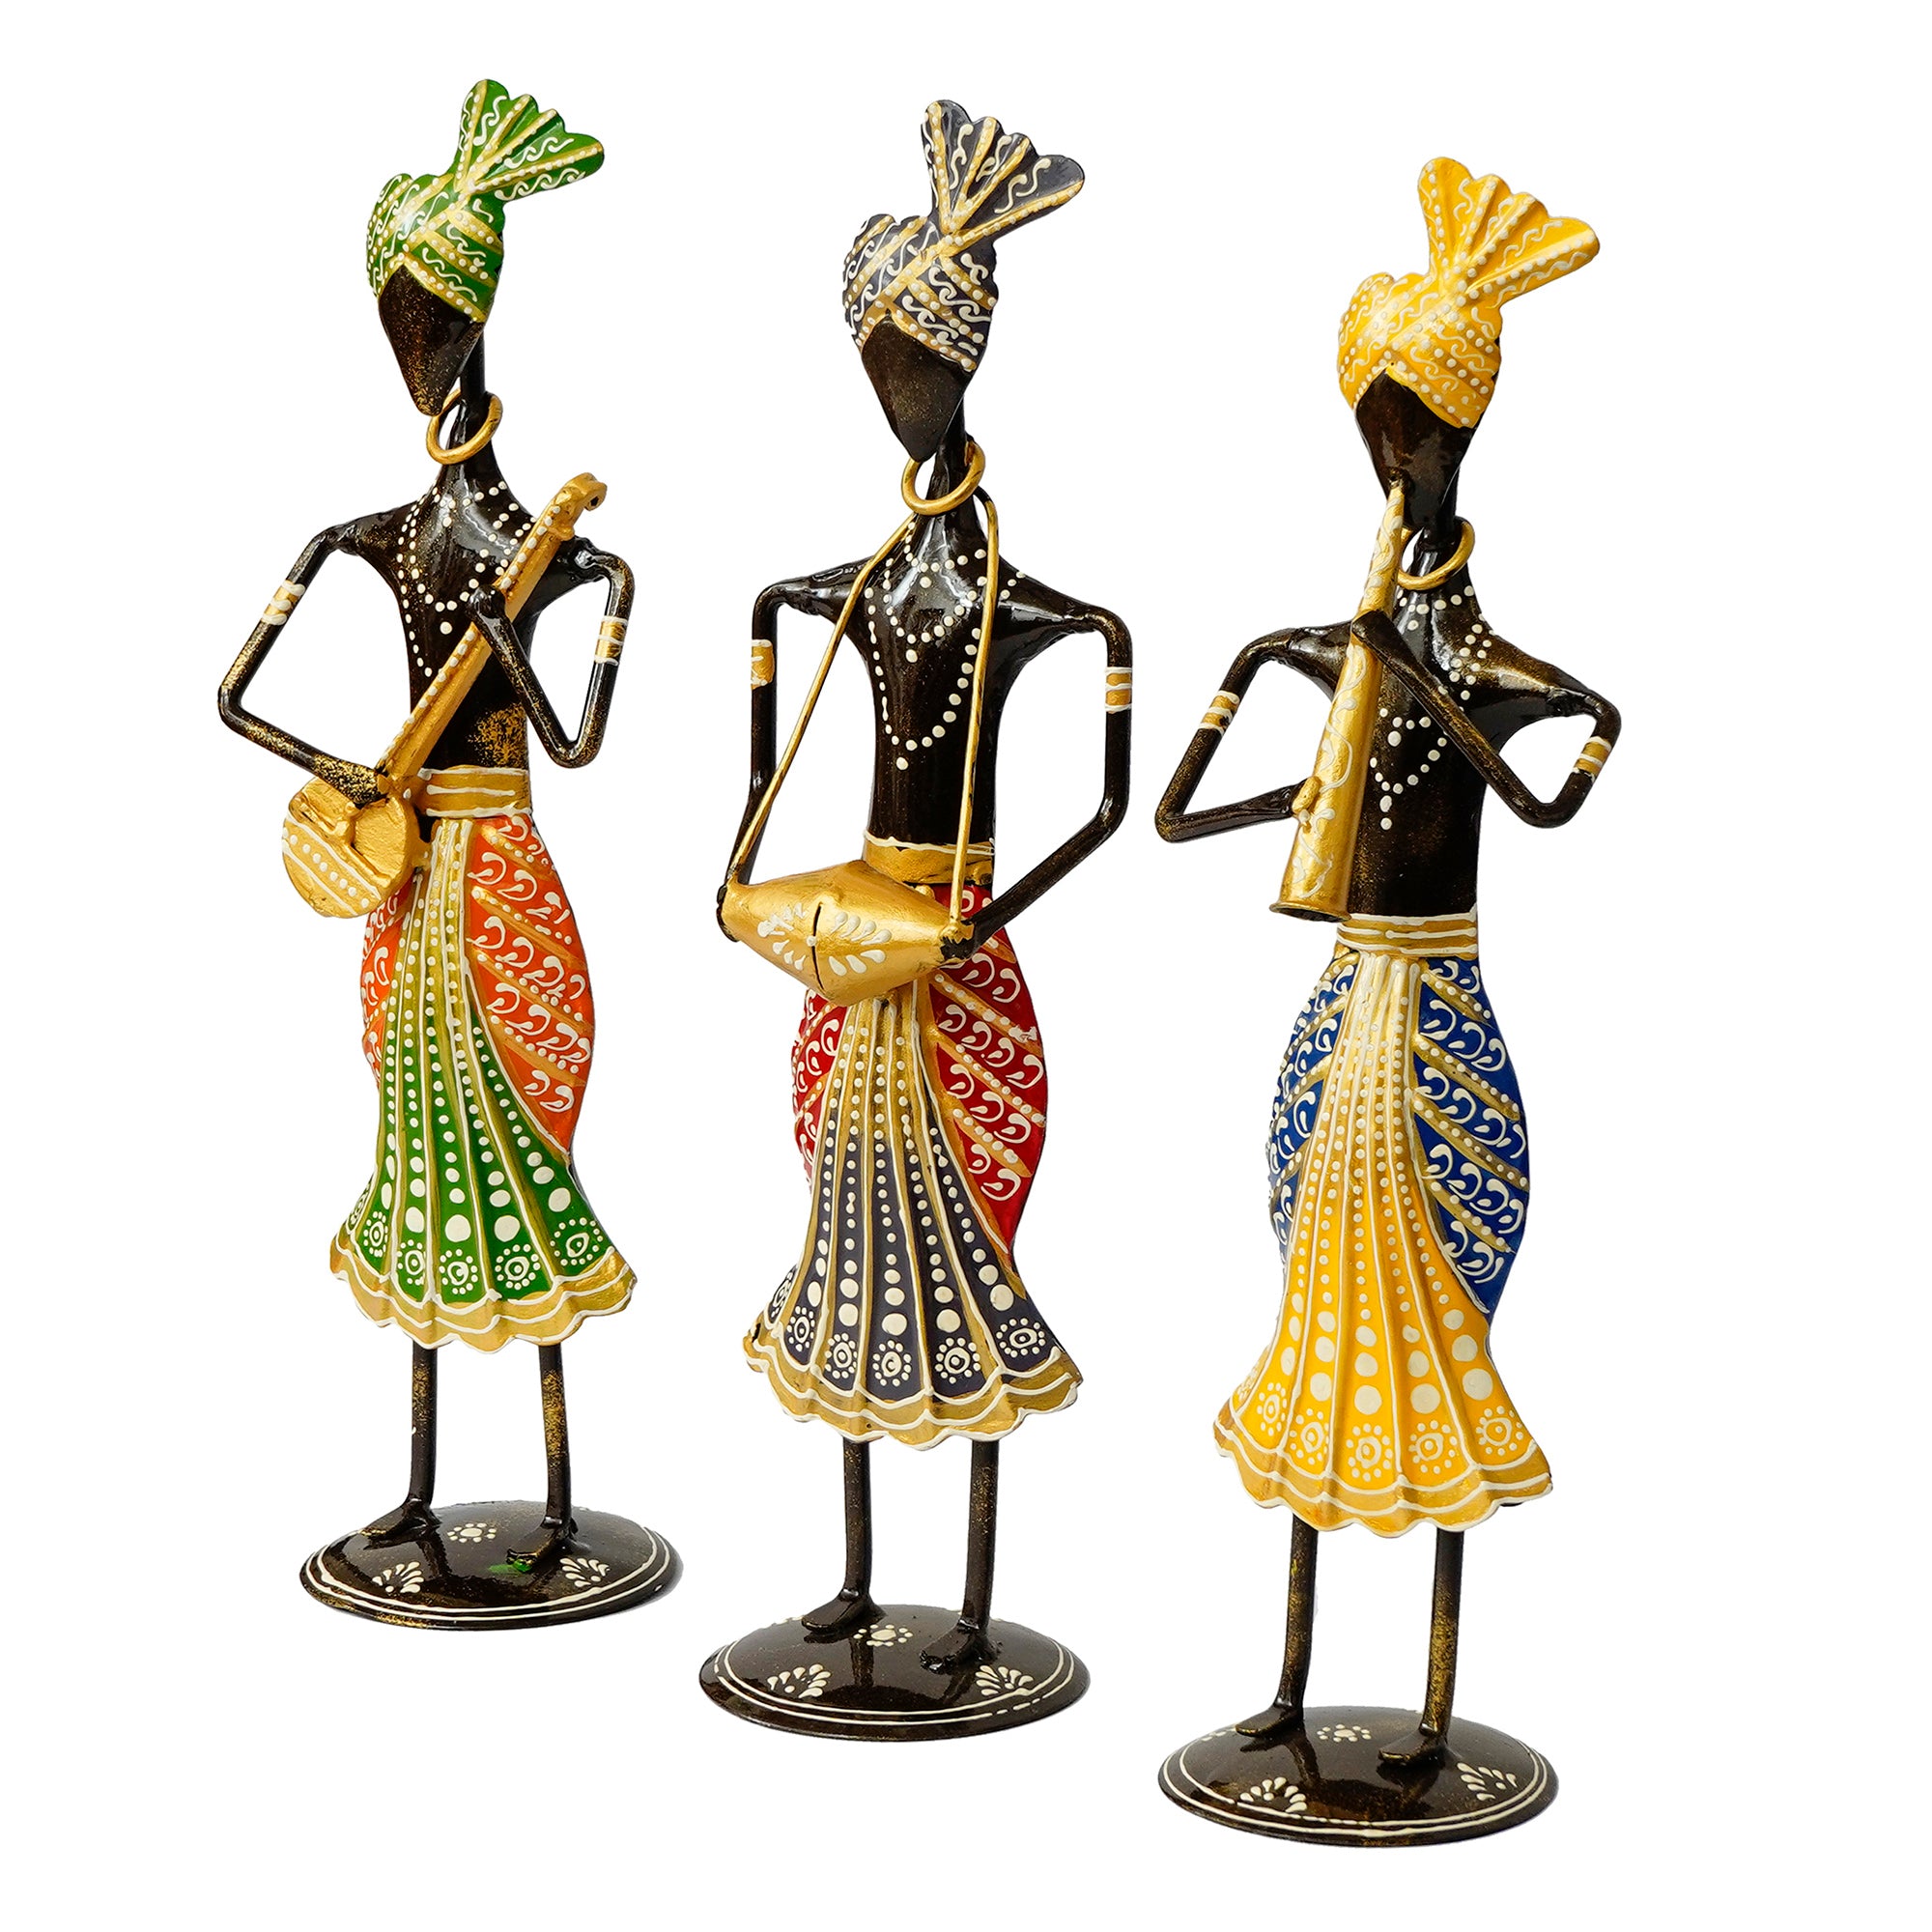 Iron Set of 3 Tribal Man Figurines Playing Banjo, Dholak, Trumpet Musical Instruments Decorative Showpiece 4